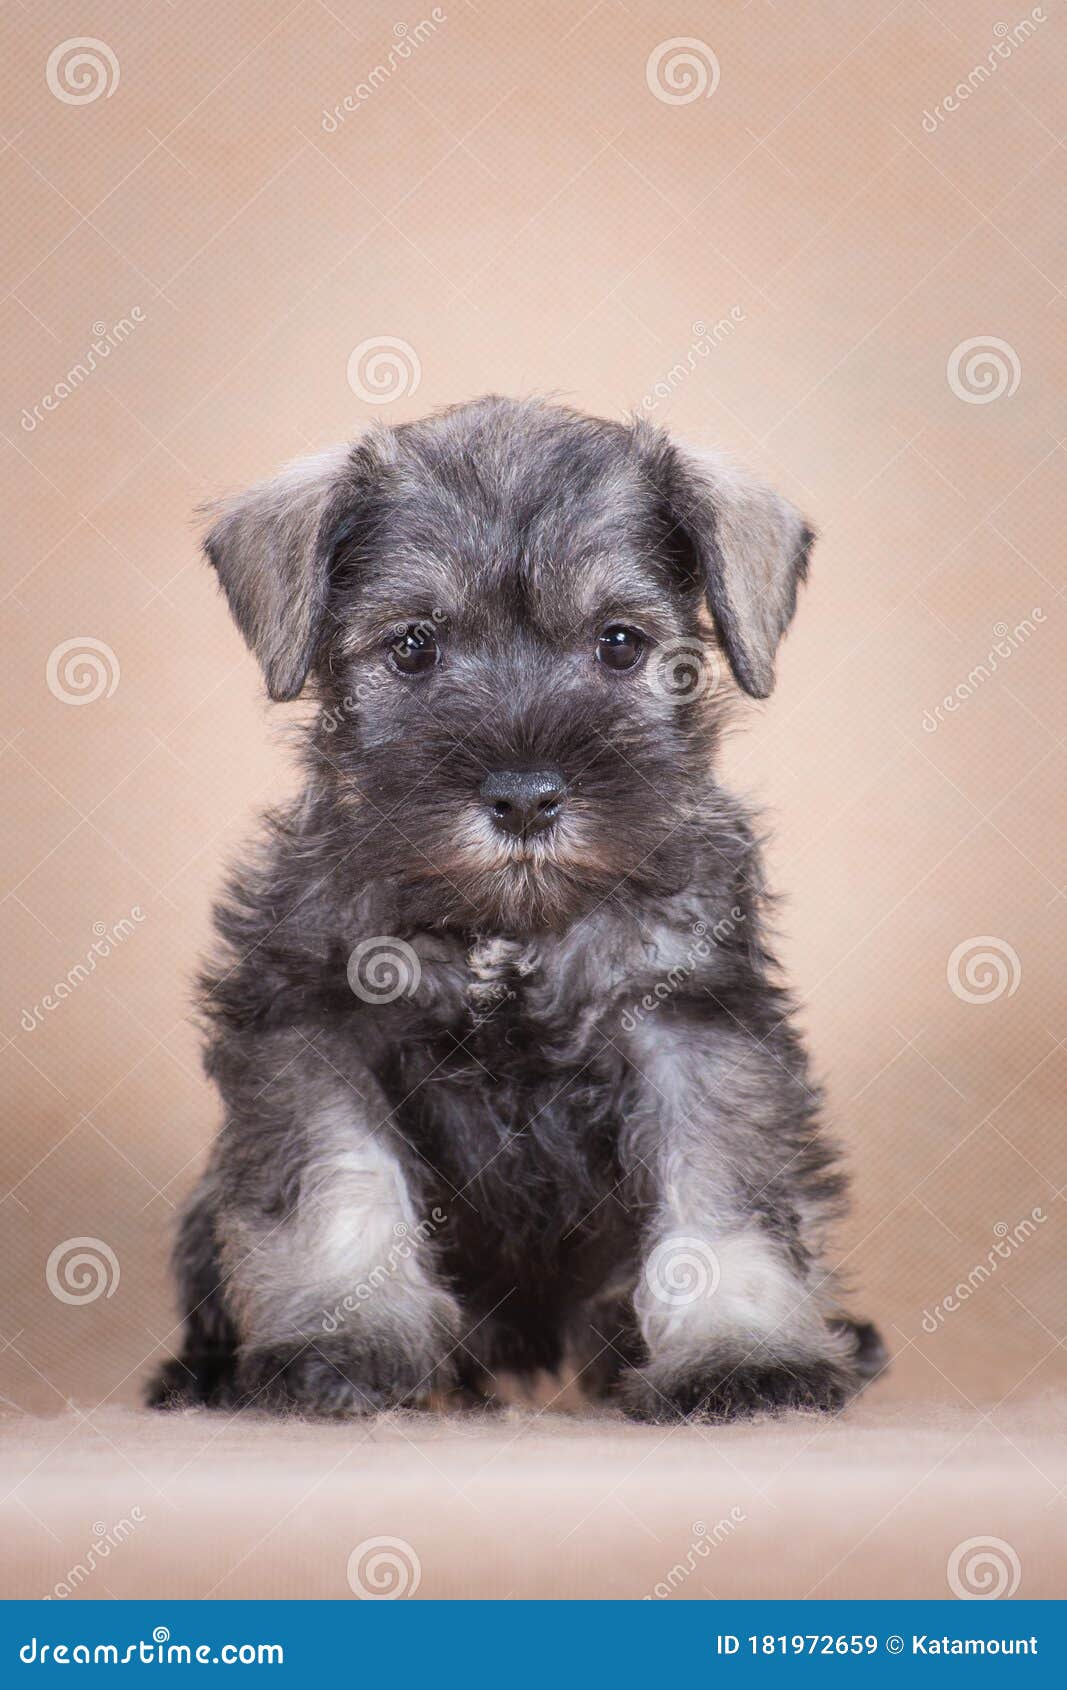 Escarpa Contaminar Cuatro Miniature Schnauzer Puppy Sits on a Beige Background Stock Image - Image of  miniature, breeds: 181972659